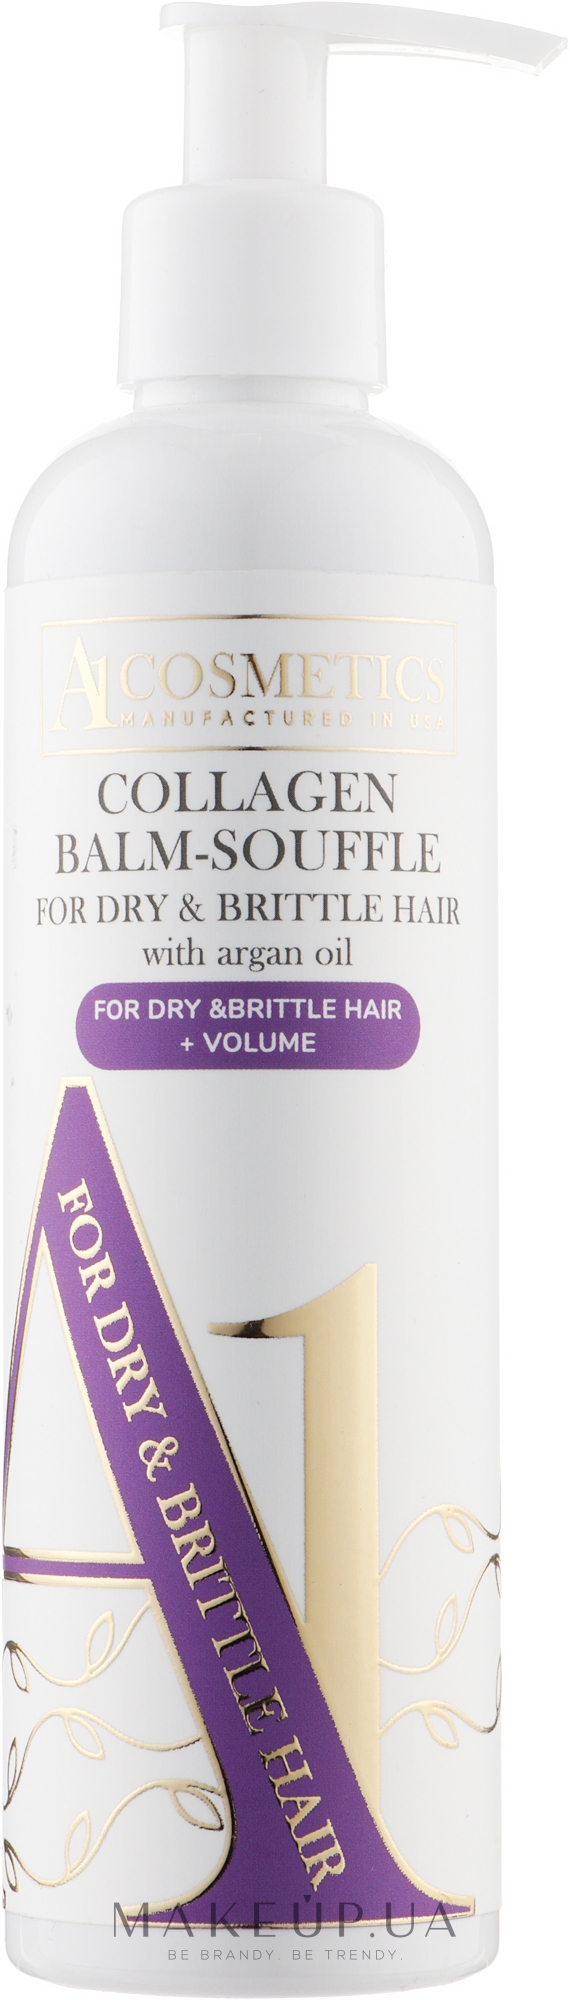 Колагеновий бальзам-суфле для сухого й ламкого волосся - A1 Cosmetics For Dry & Brittle Hair Collagen Balm-Souffle With Argan Oil + Volume — фото 250ml